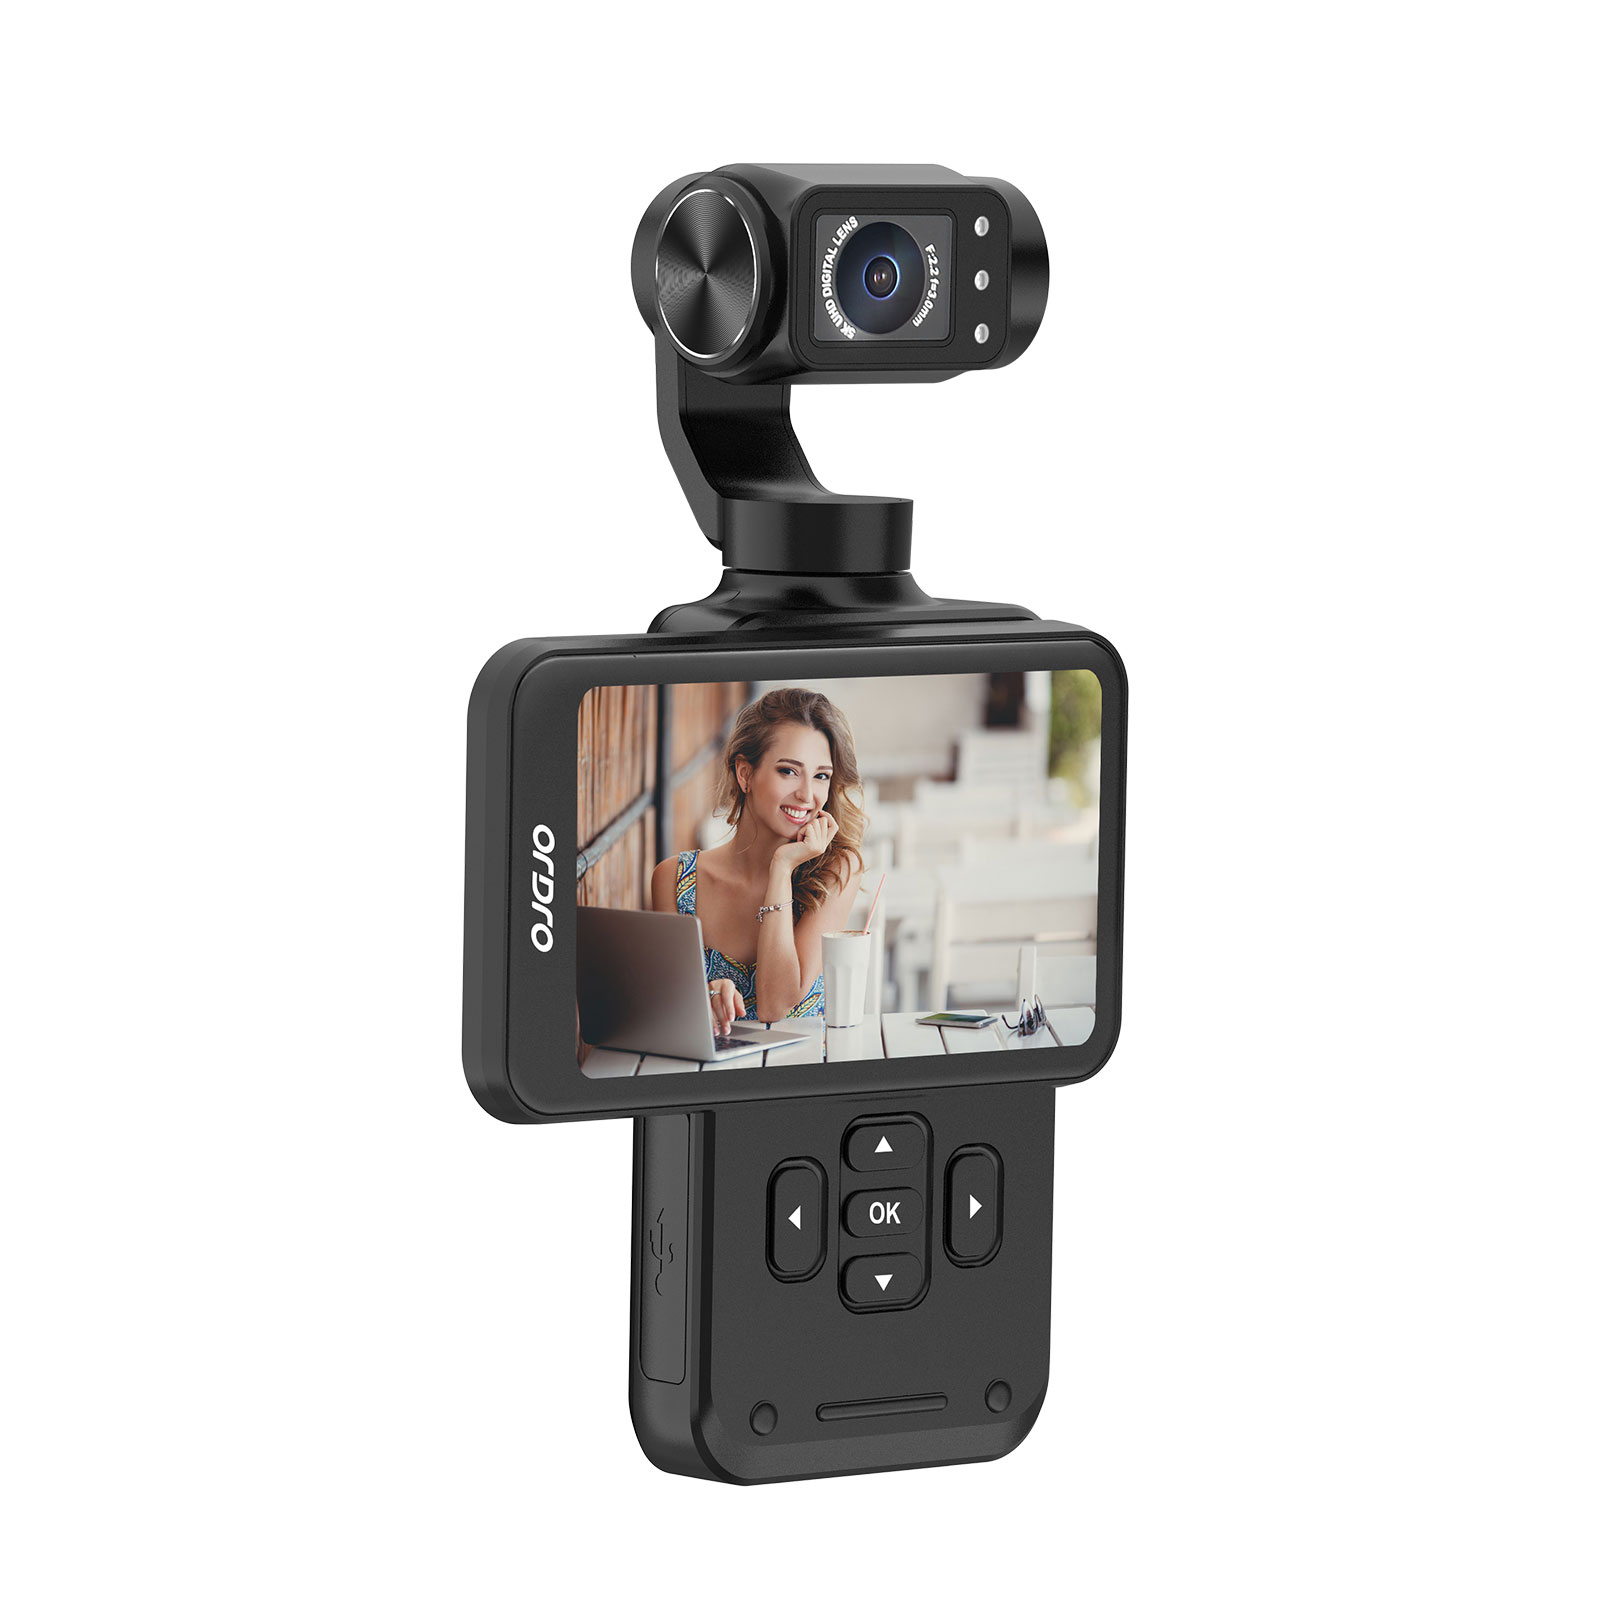 ORDRO M5 pocket camera handheld gimbal anti-shake vlog shooting travel Boston portable compact camera